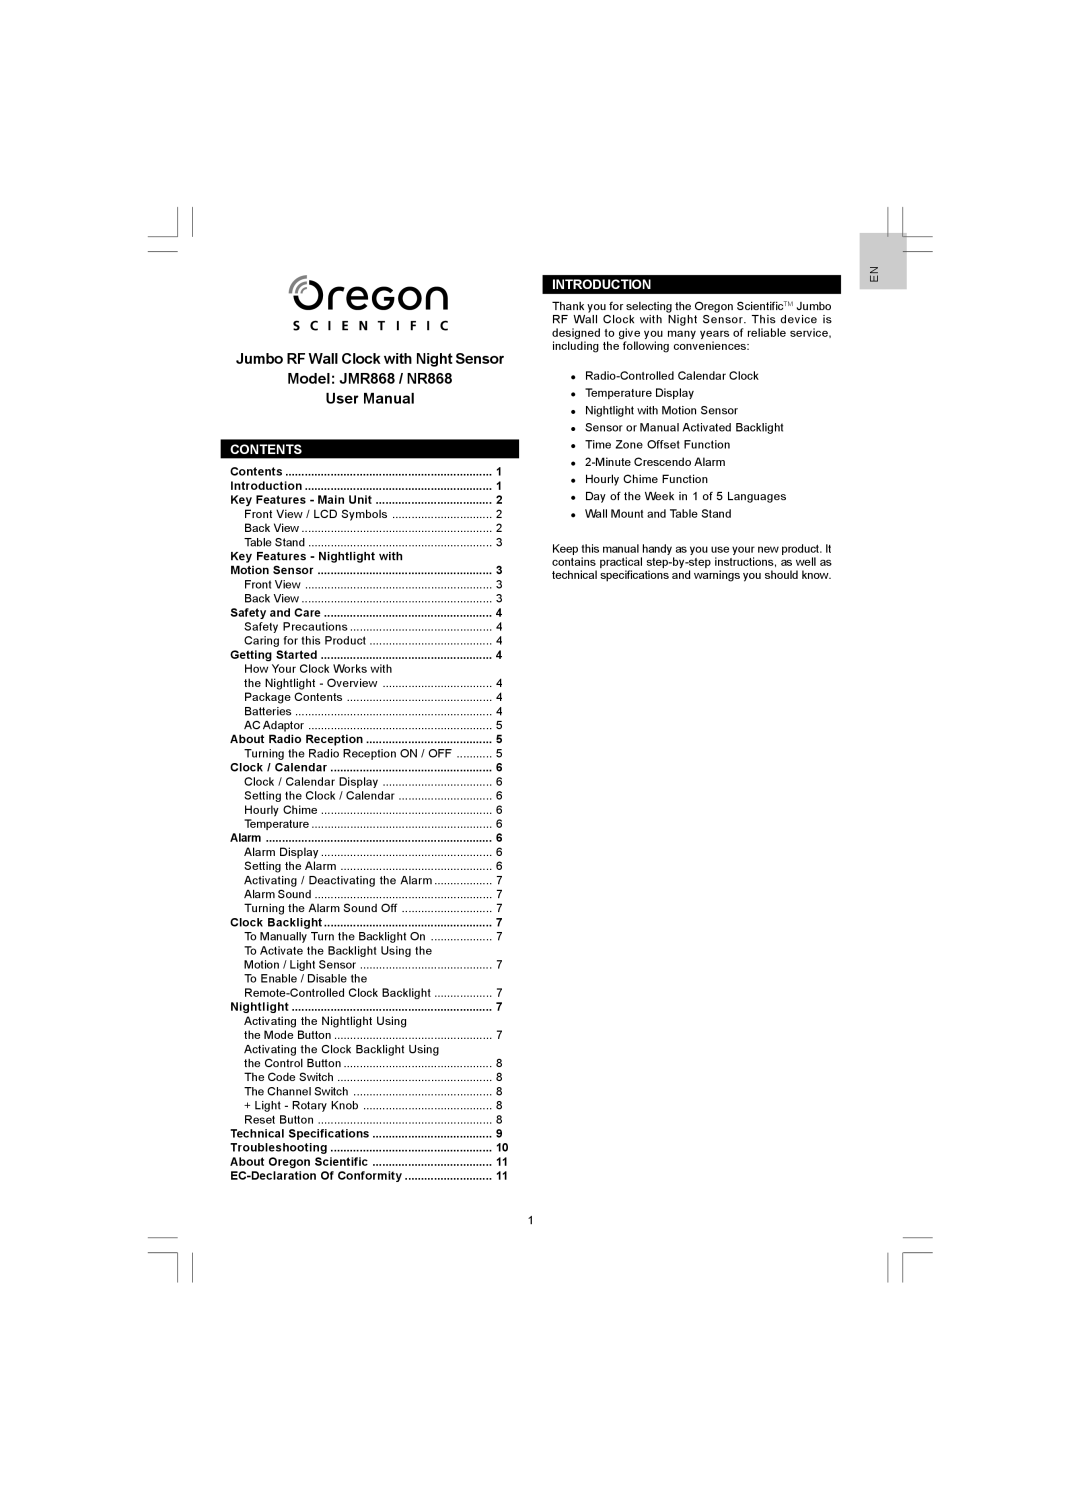 Oregon Scientific Contents, Introduction, Jumbo RF Wall Clock with Night Sensor Model JMR868 / NR868, User Manual 